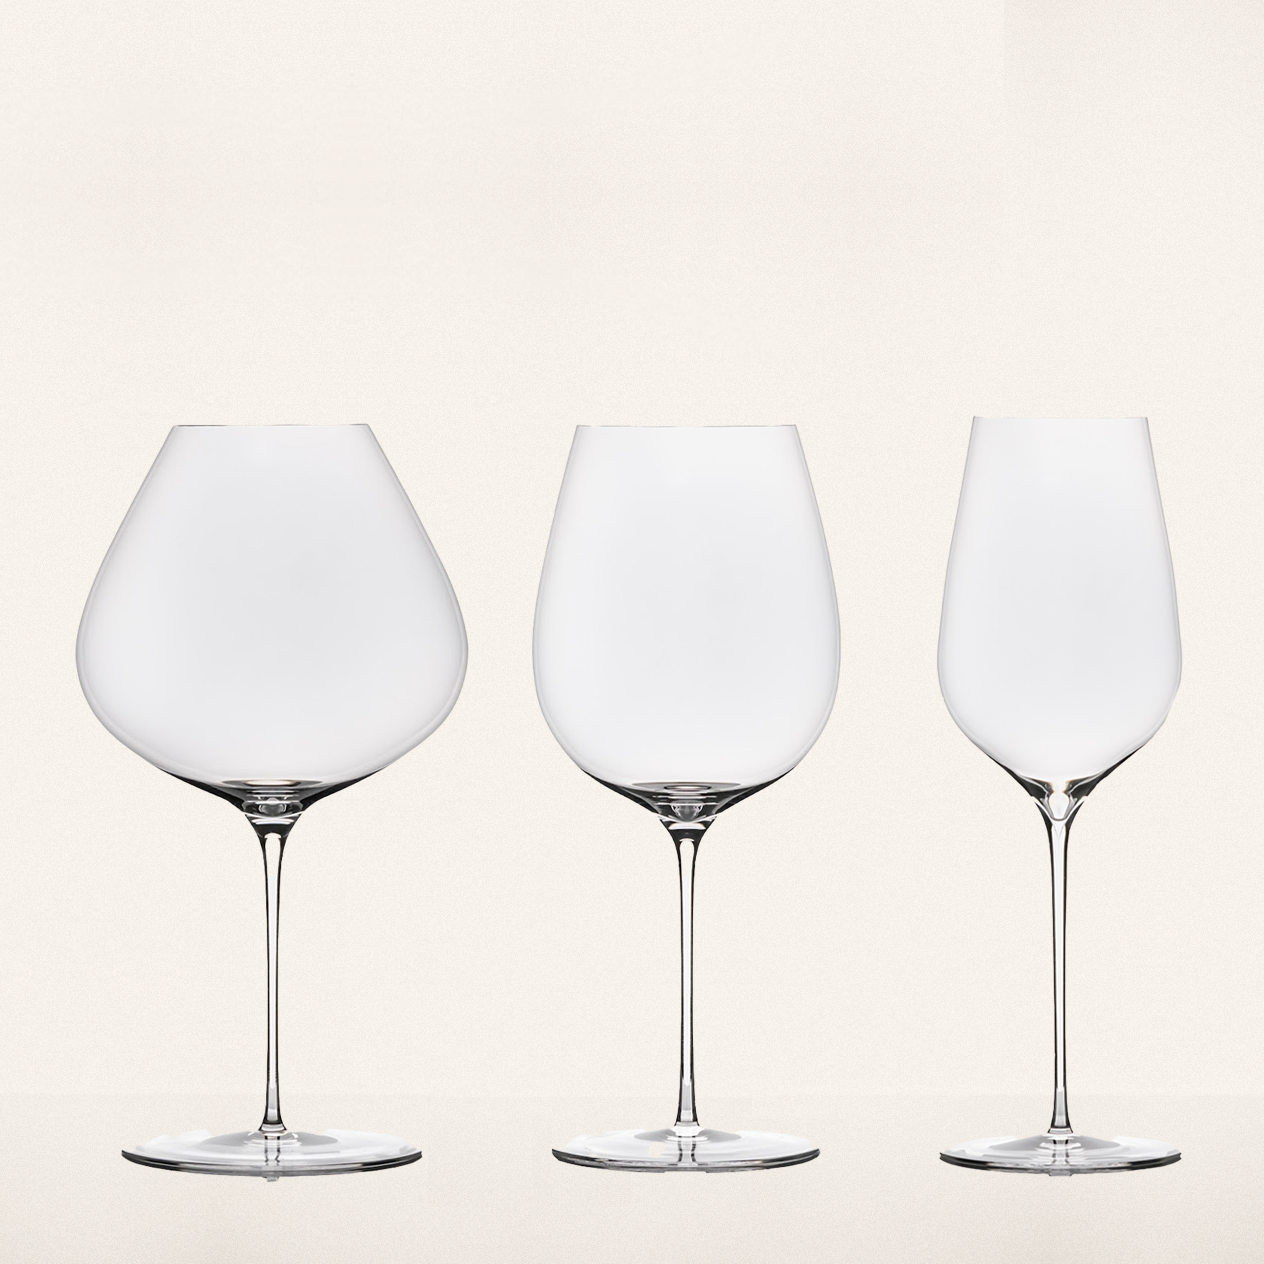 L'Esthete - set of 2 glasses